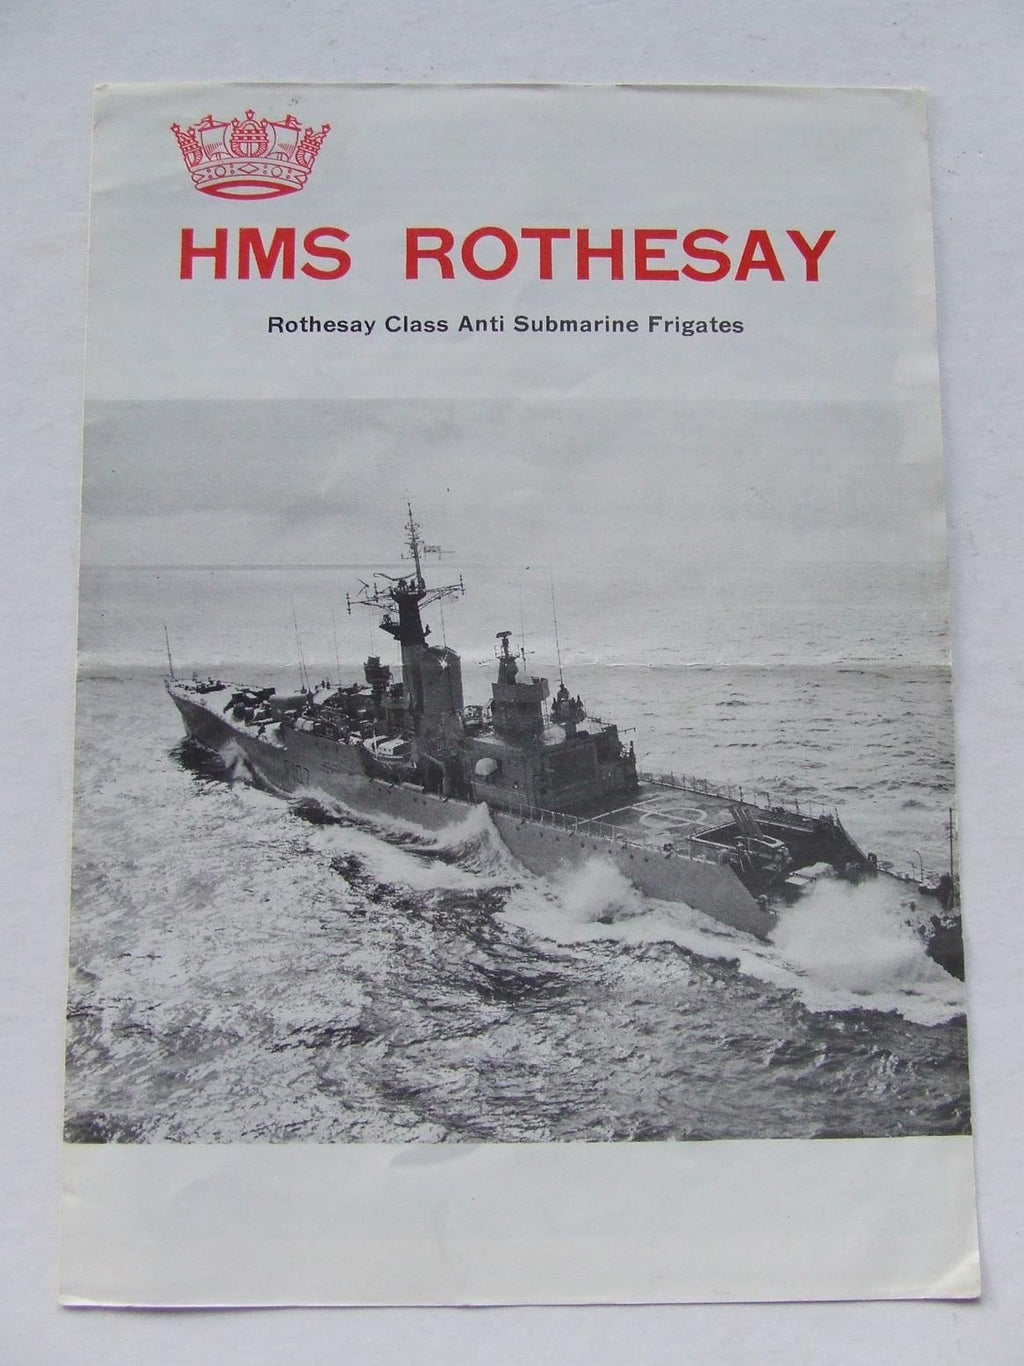 HMS Rothesay - Rothesay Class anti-submarine frigates